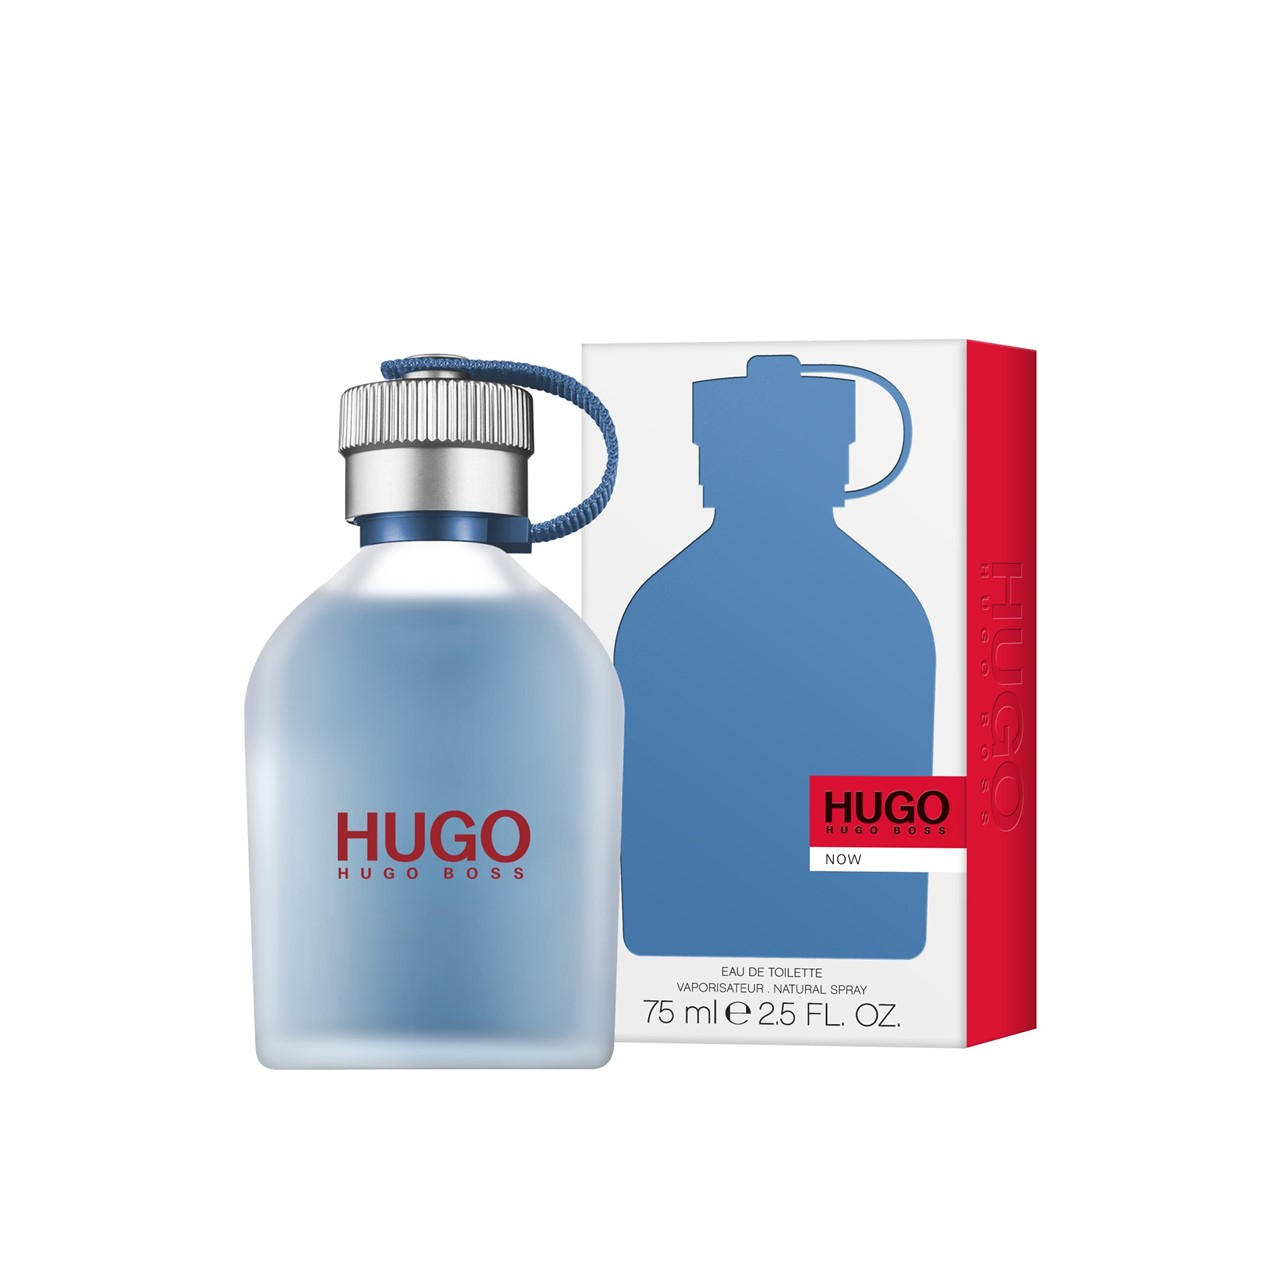 Hugo Boss Hugo Now Eau de Toilette 75ml (2.5fl oz)